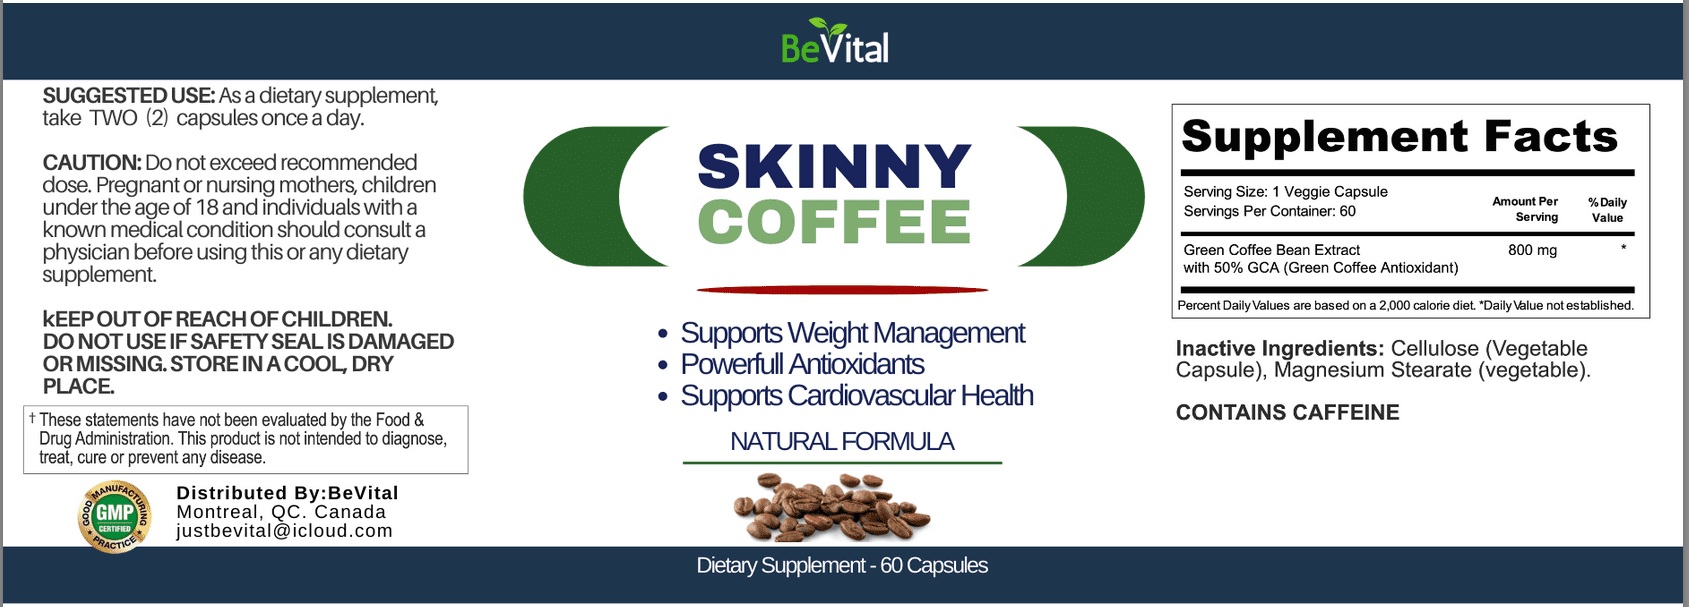 Skinny Coffee Label